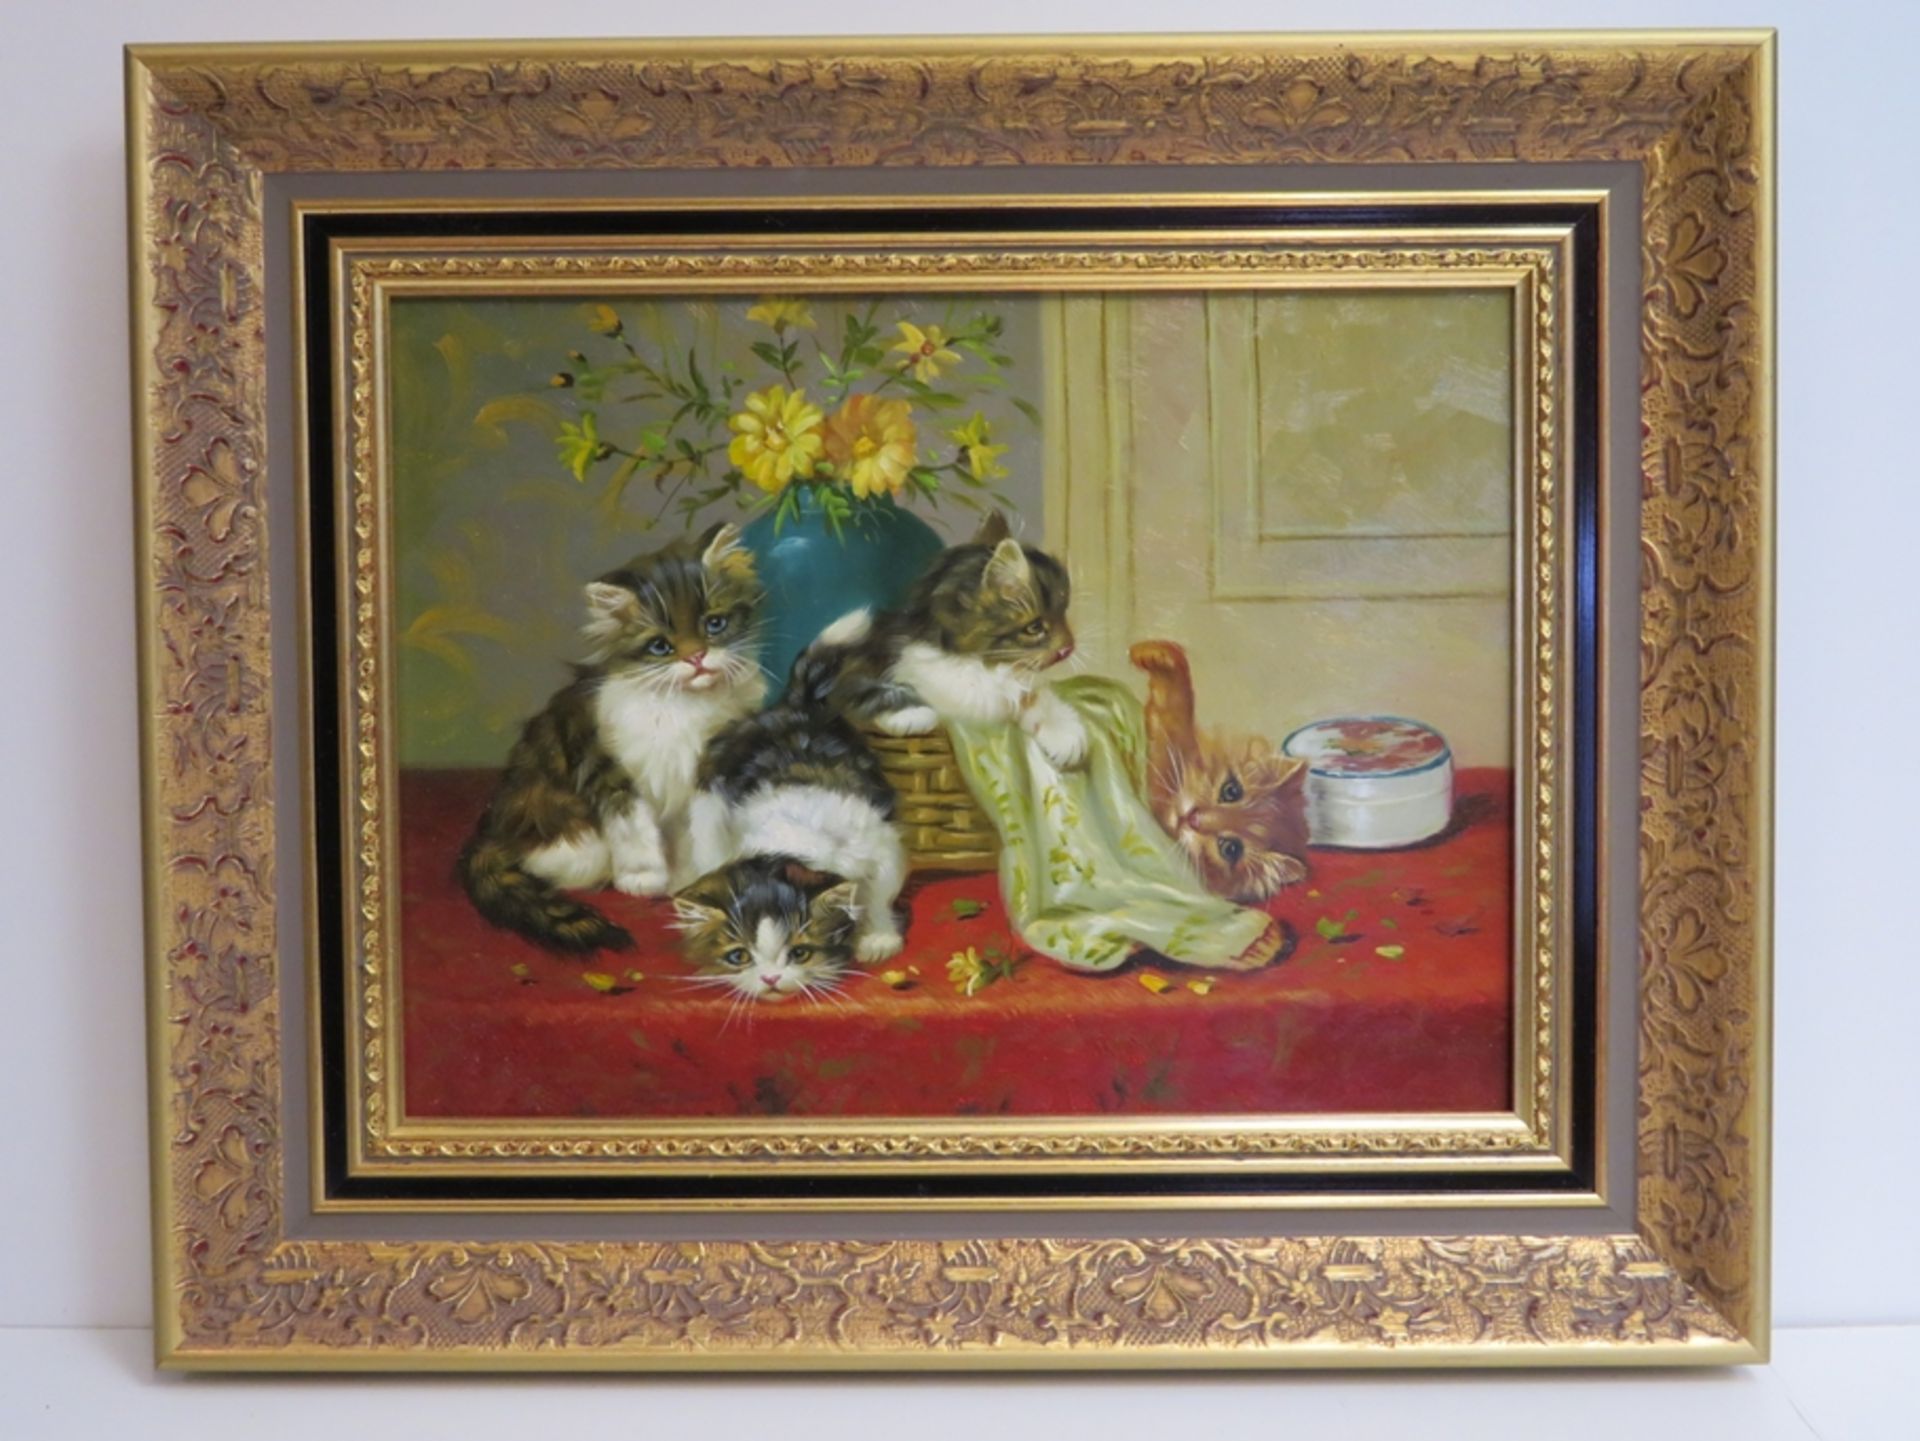 Unbekannt, "Drei spielende Kätzchen", Öl/Holz, 30,5 x 40 cm, vergoldeter Stuckrahmen [44 x 54 cm] - Bild 2 aus 2